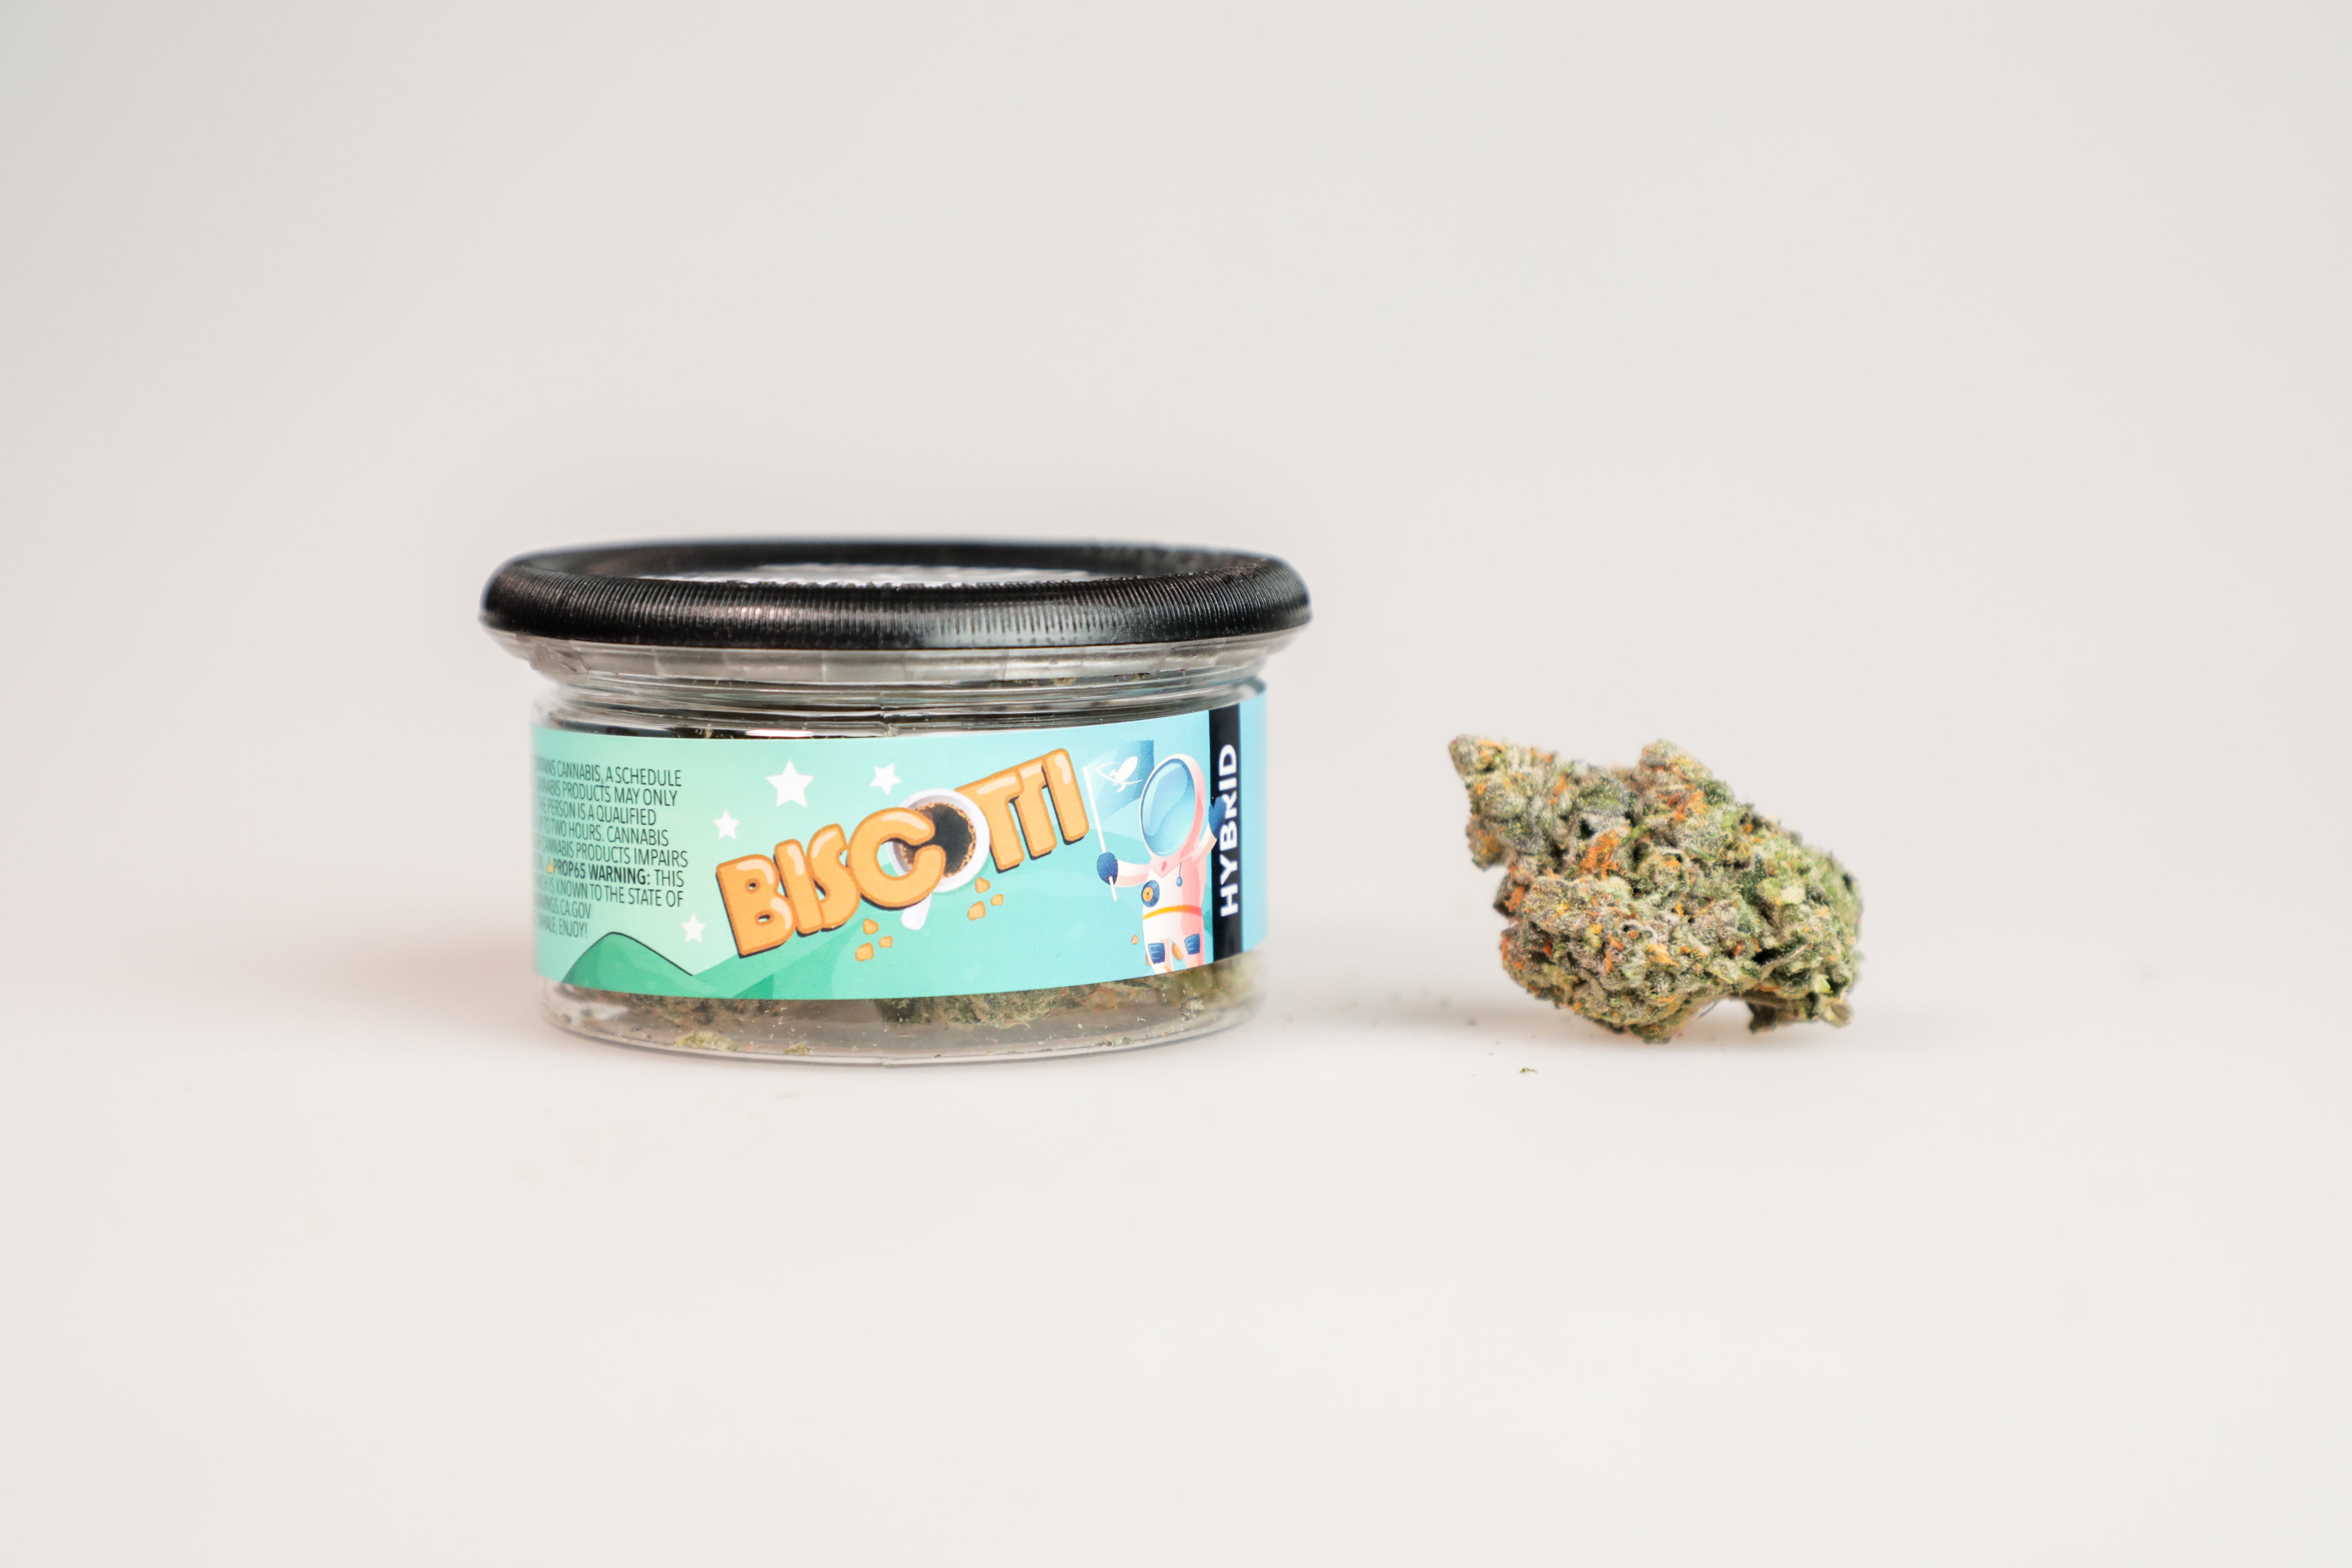 marijuana-dispensaries-979-n-la-brea-ave-los-angeles-biscotti-by-herbarium